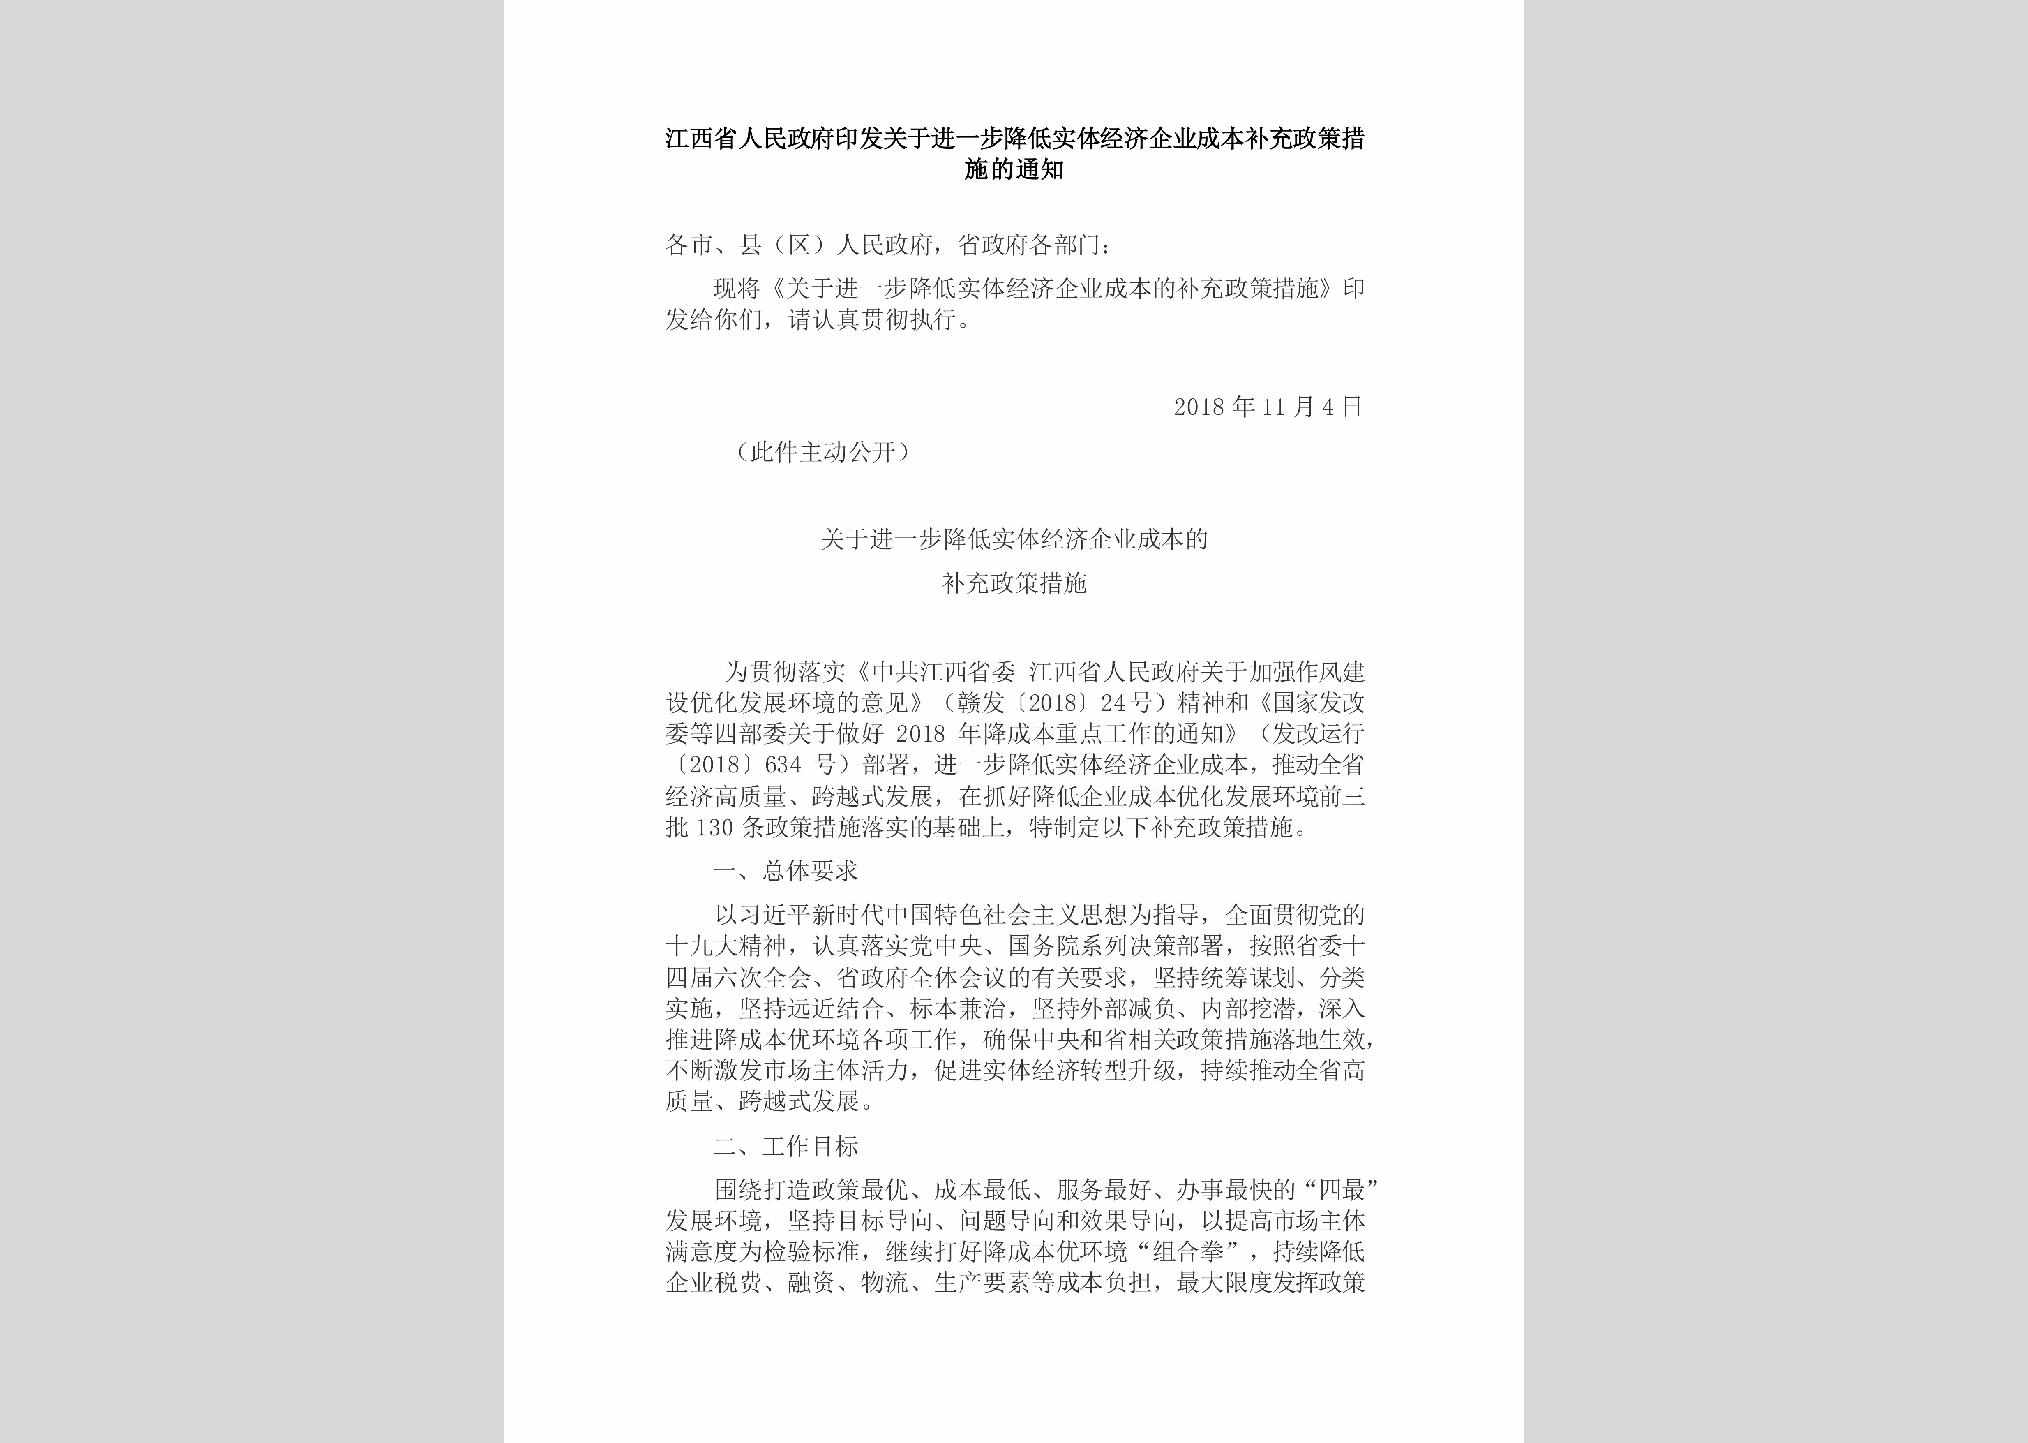 JX-JJQYCBBC-2018：江西省人民政府印发关于进一步降低实体经济企业成本补充政策措施的通知